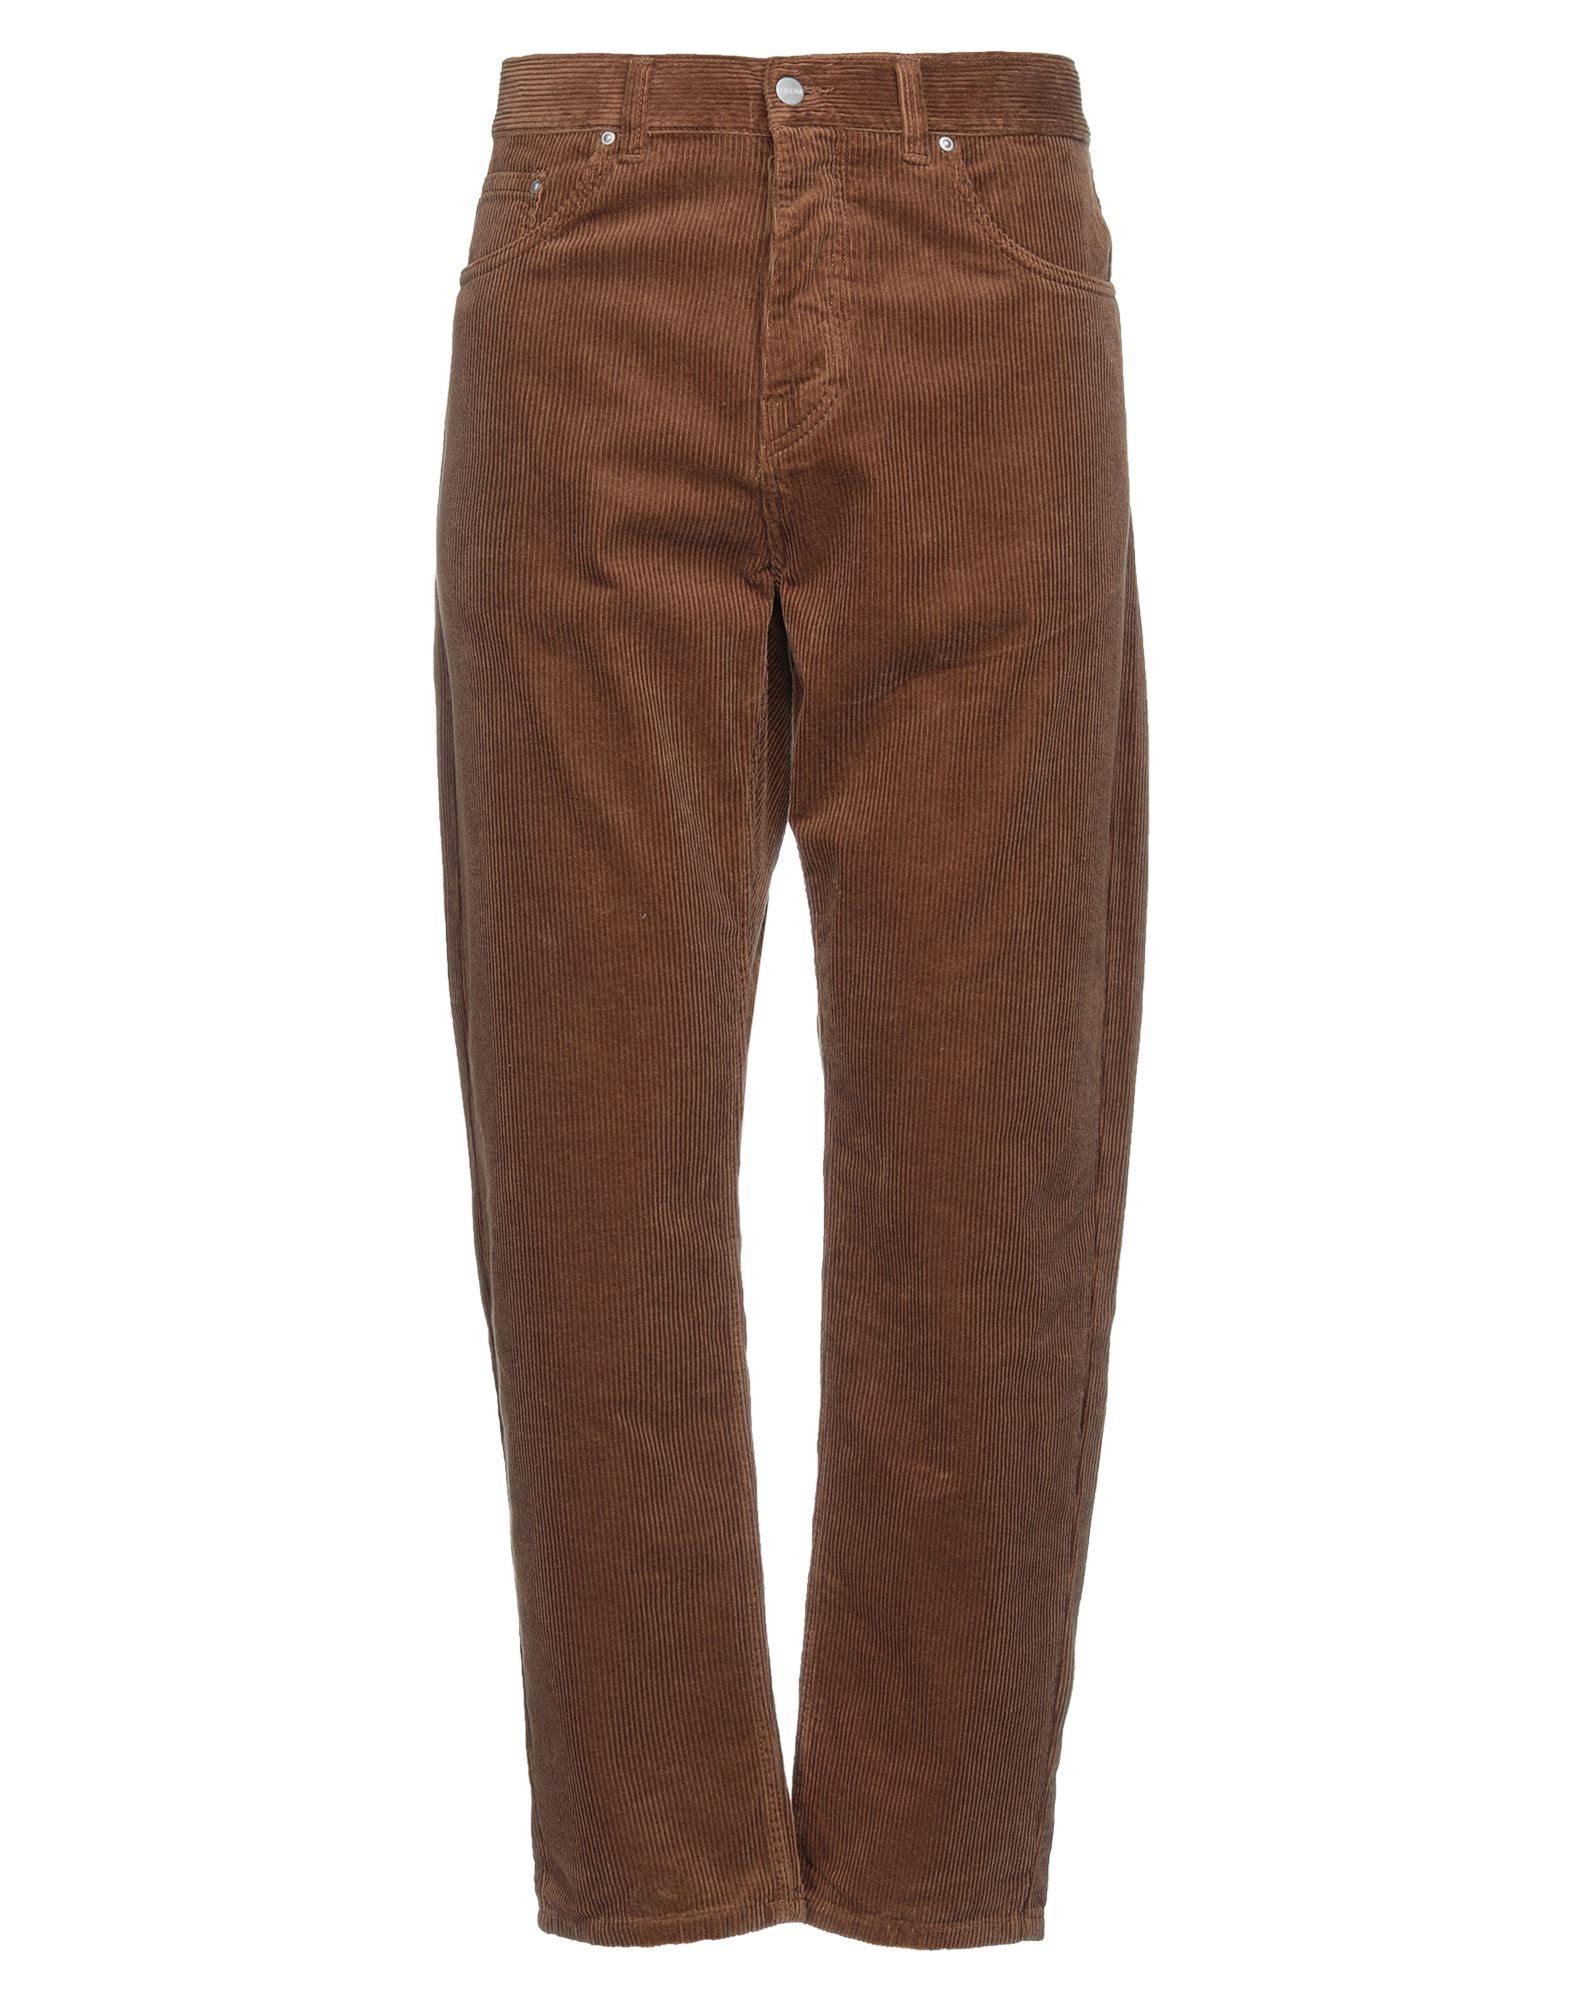 Carhartt Pants In Brown